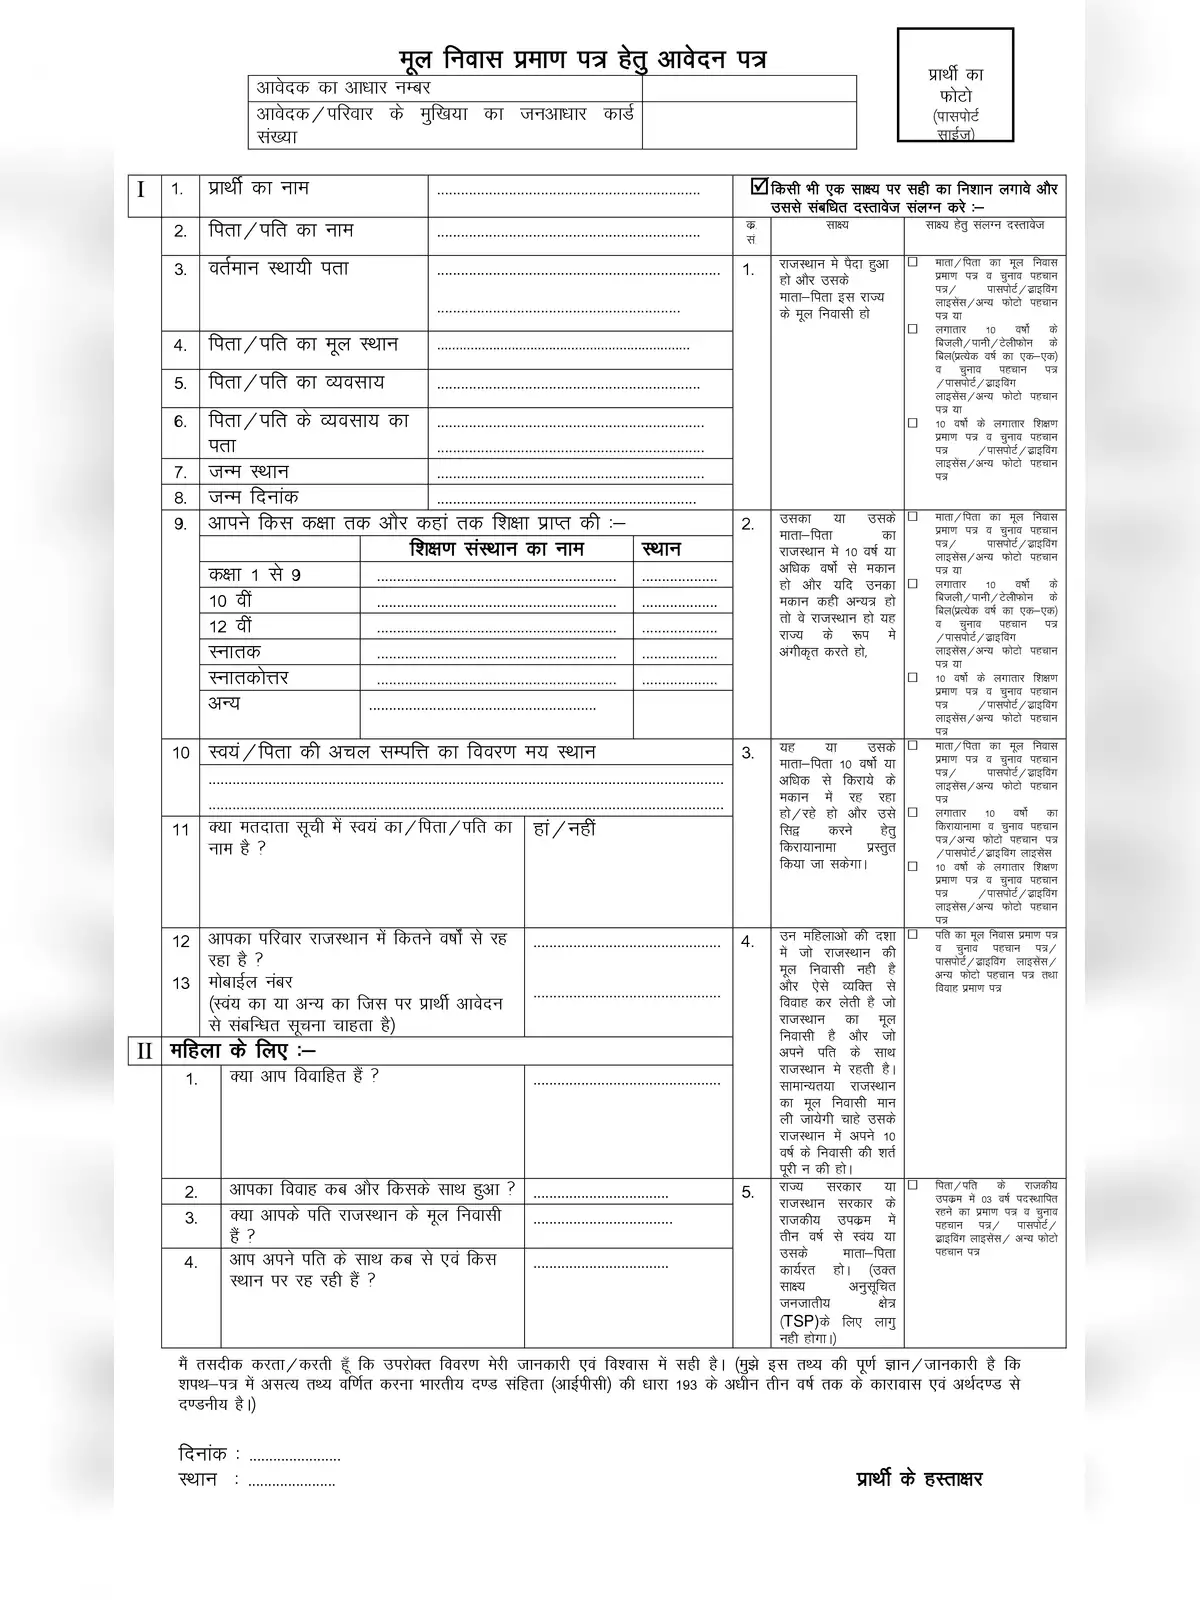 Bonafide Certificate Form Rajasthan